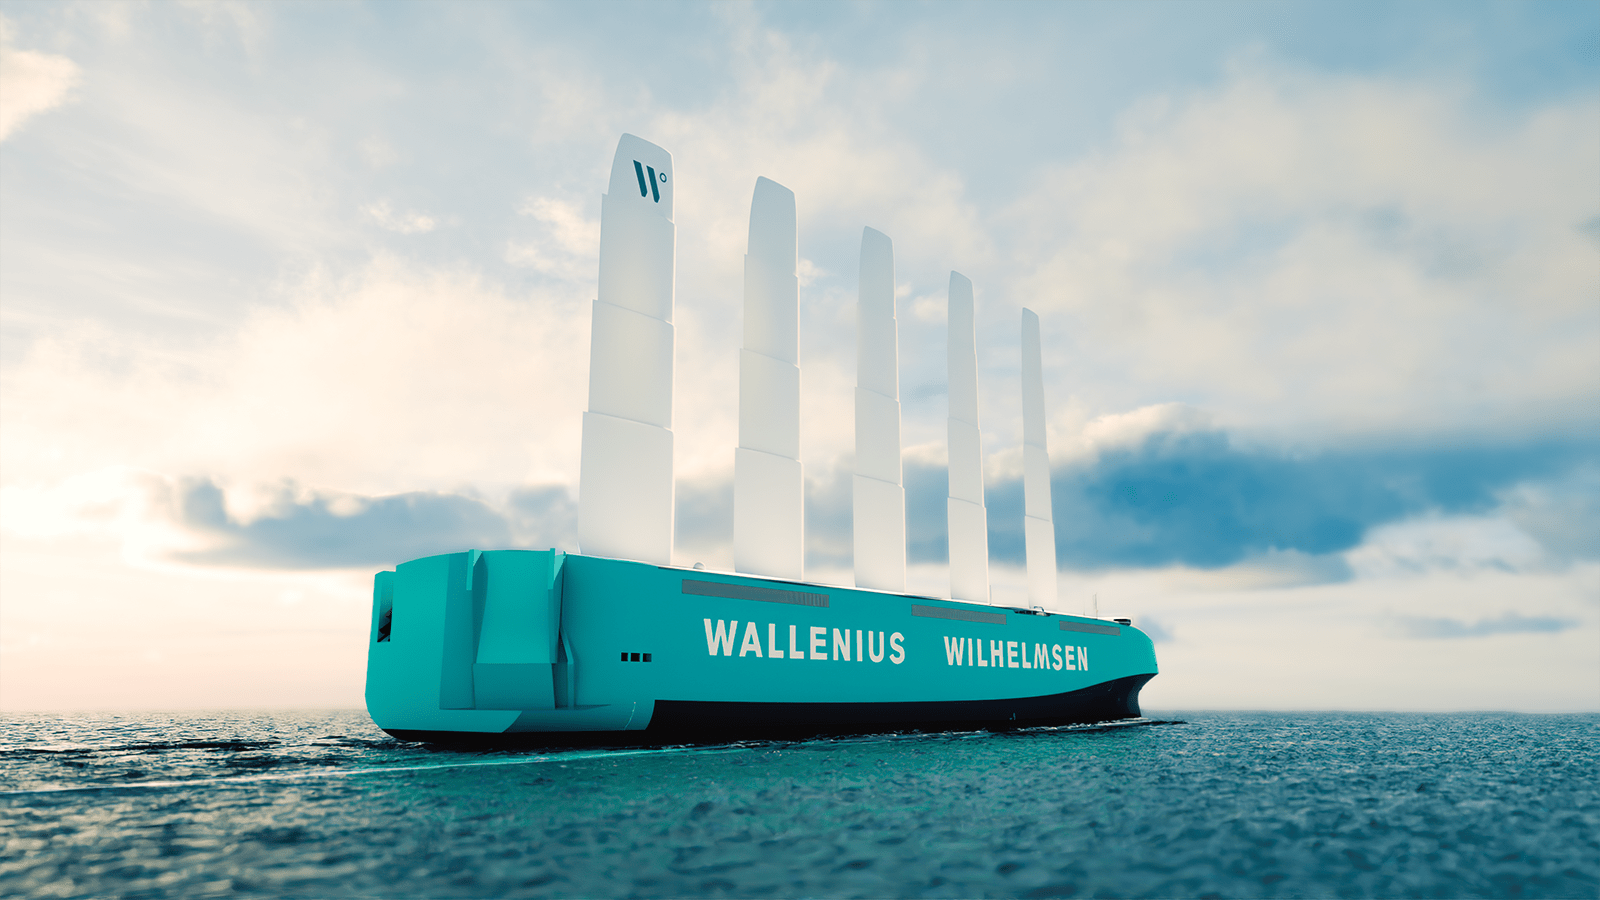 Orcelle Wind, de Wallenius Wilhelmsen, empezará a navegar hacia finales de 2026. (Wallenius Wilhelmsen)